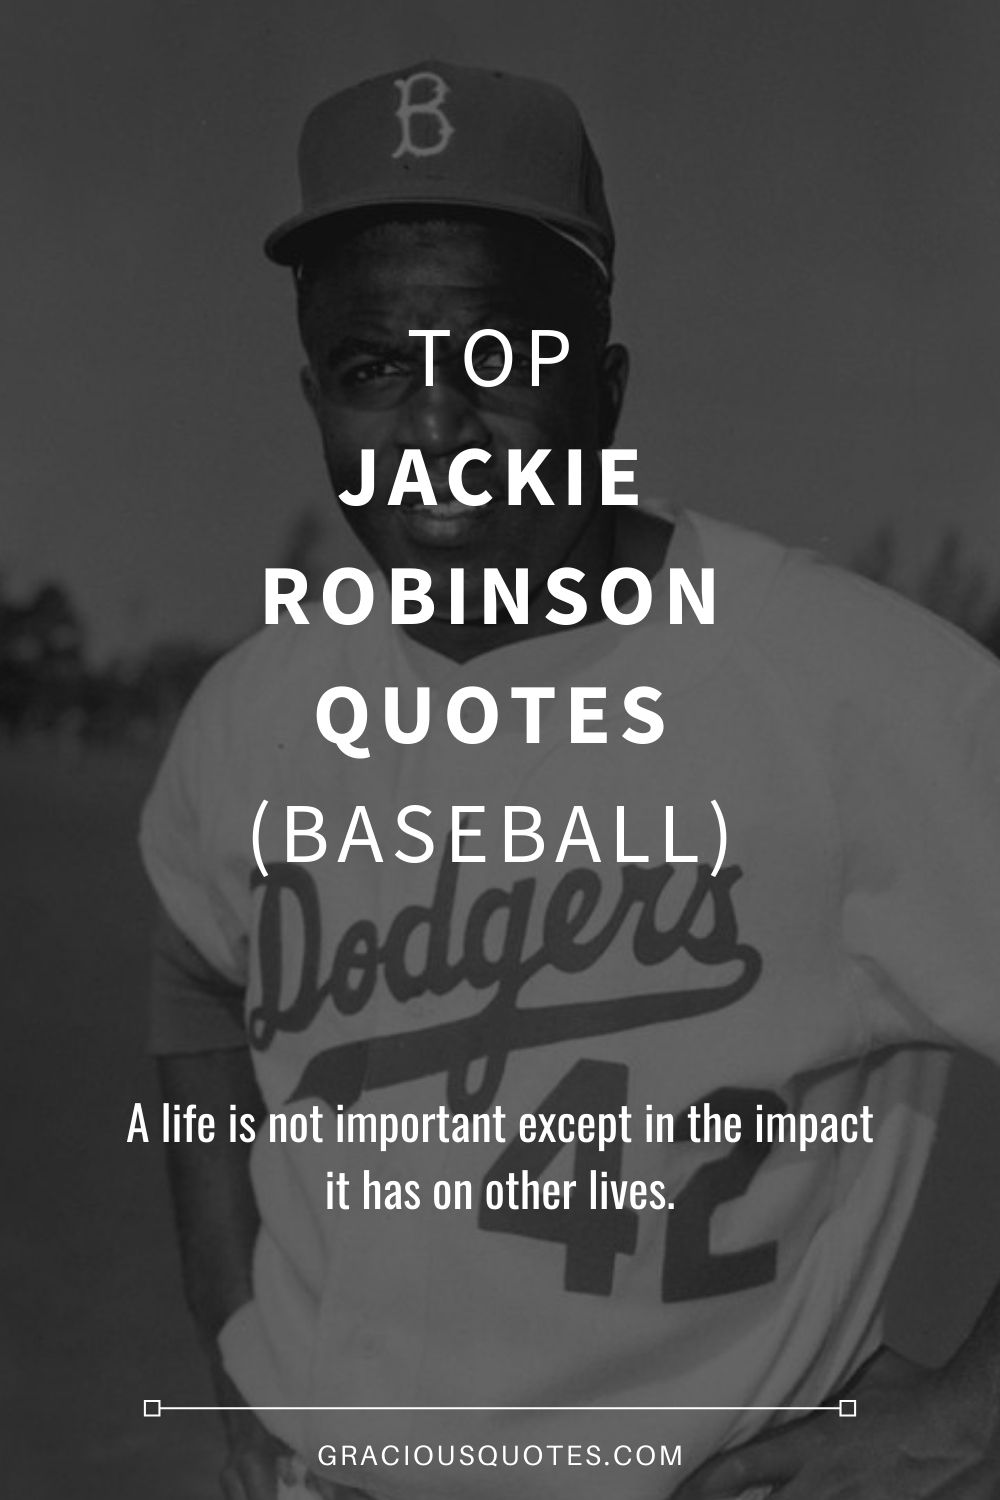 Top Jackie Robinson Quotes (BASEBALL) - Gracious Quotes